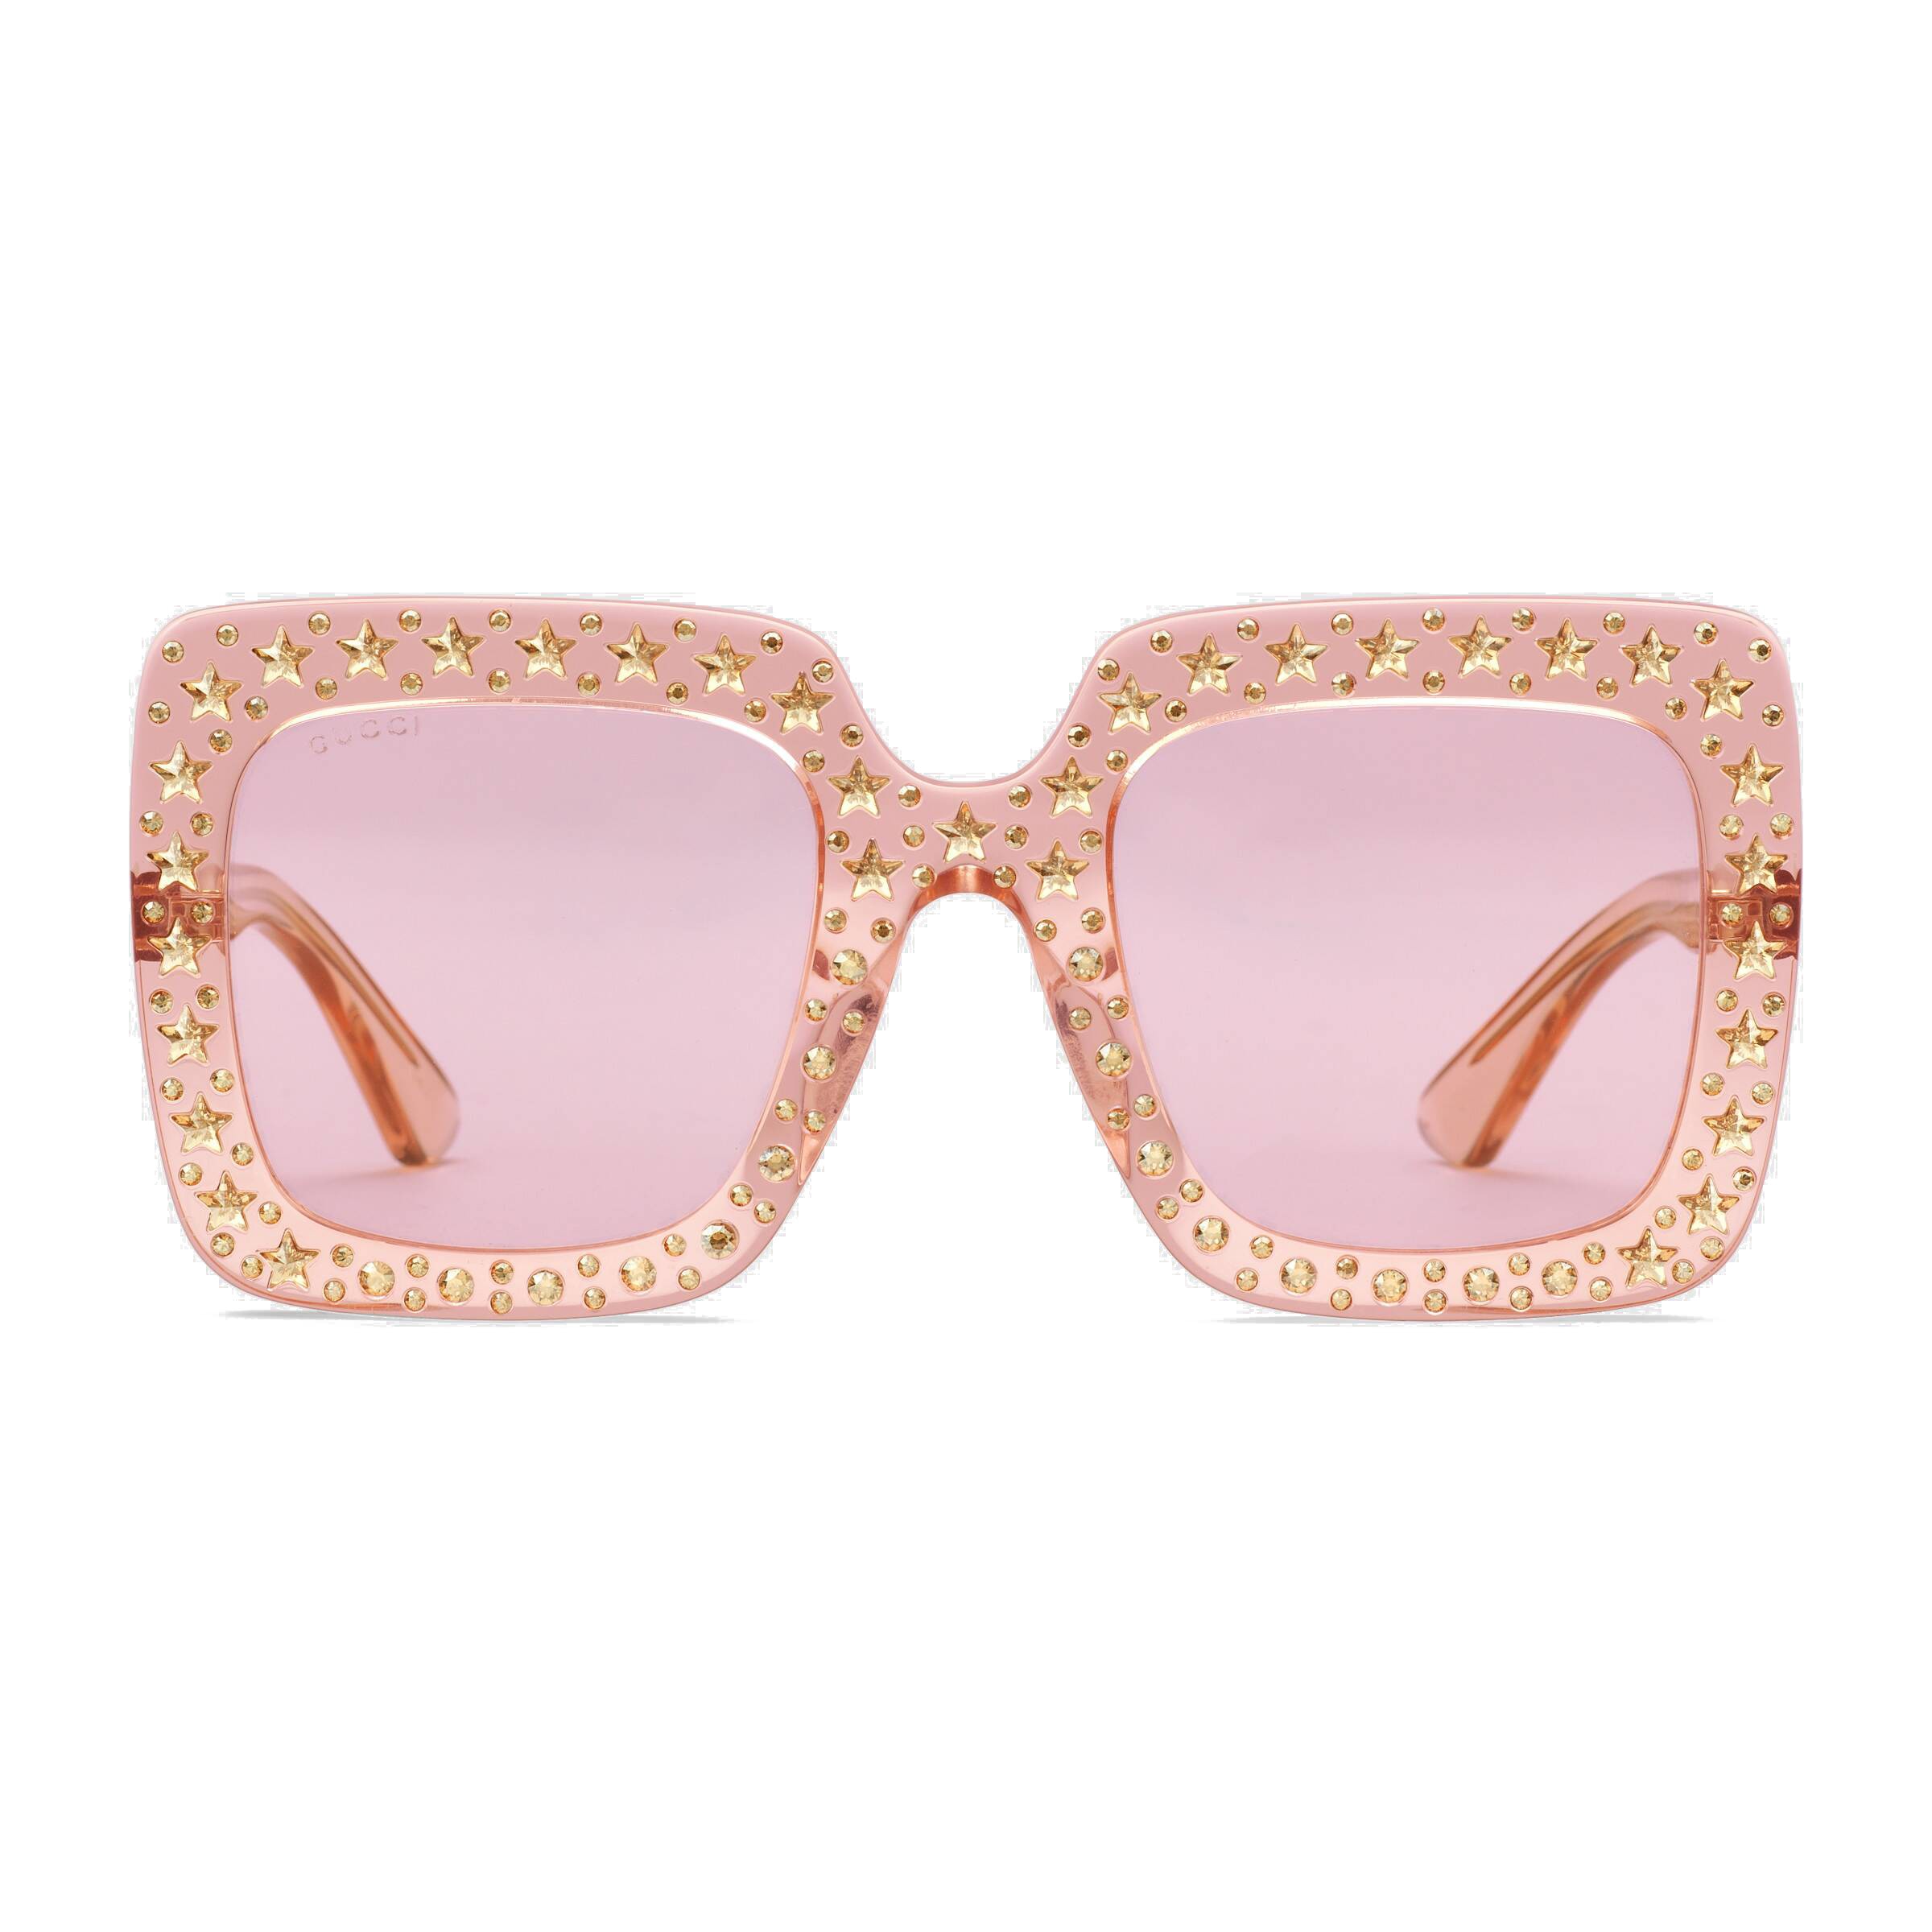 Accessories Sunglasses Square Glasses Vogue Square Glasses pink-gold-colored elegant 